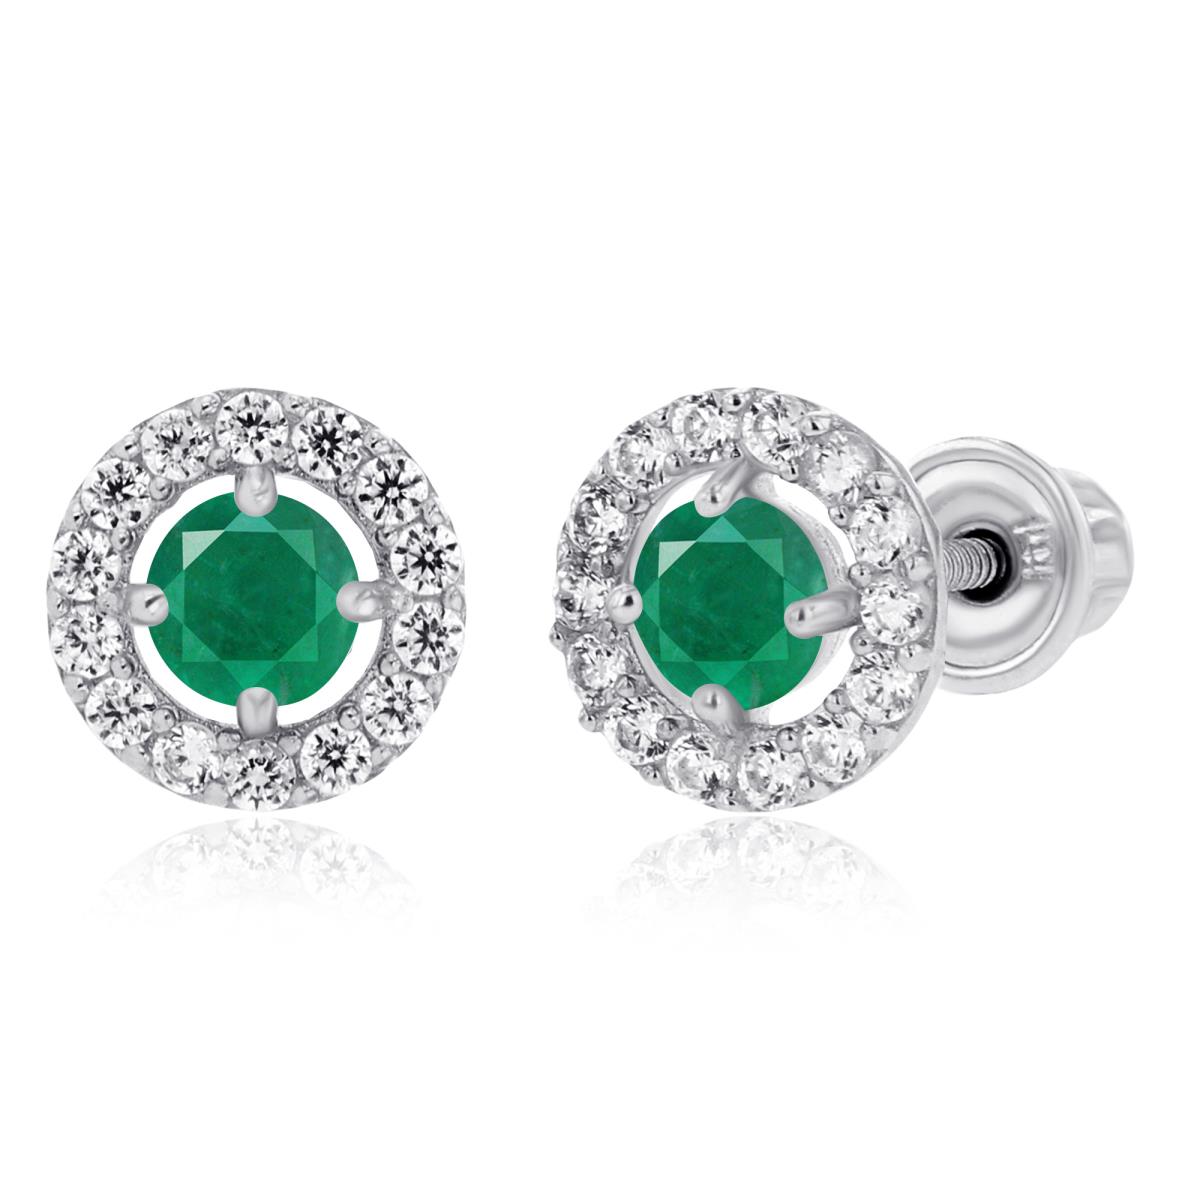 14K White Gold 3mm Emerald & 1mm Created White Sapphire Halo Screwback Earrings